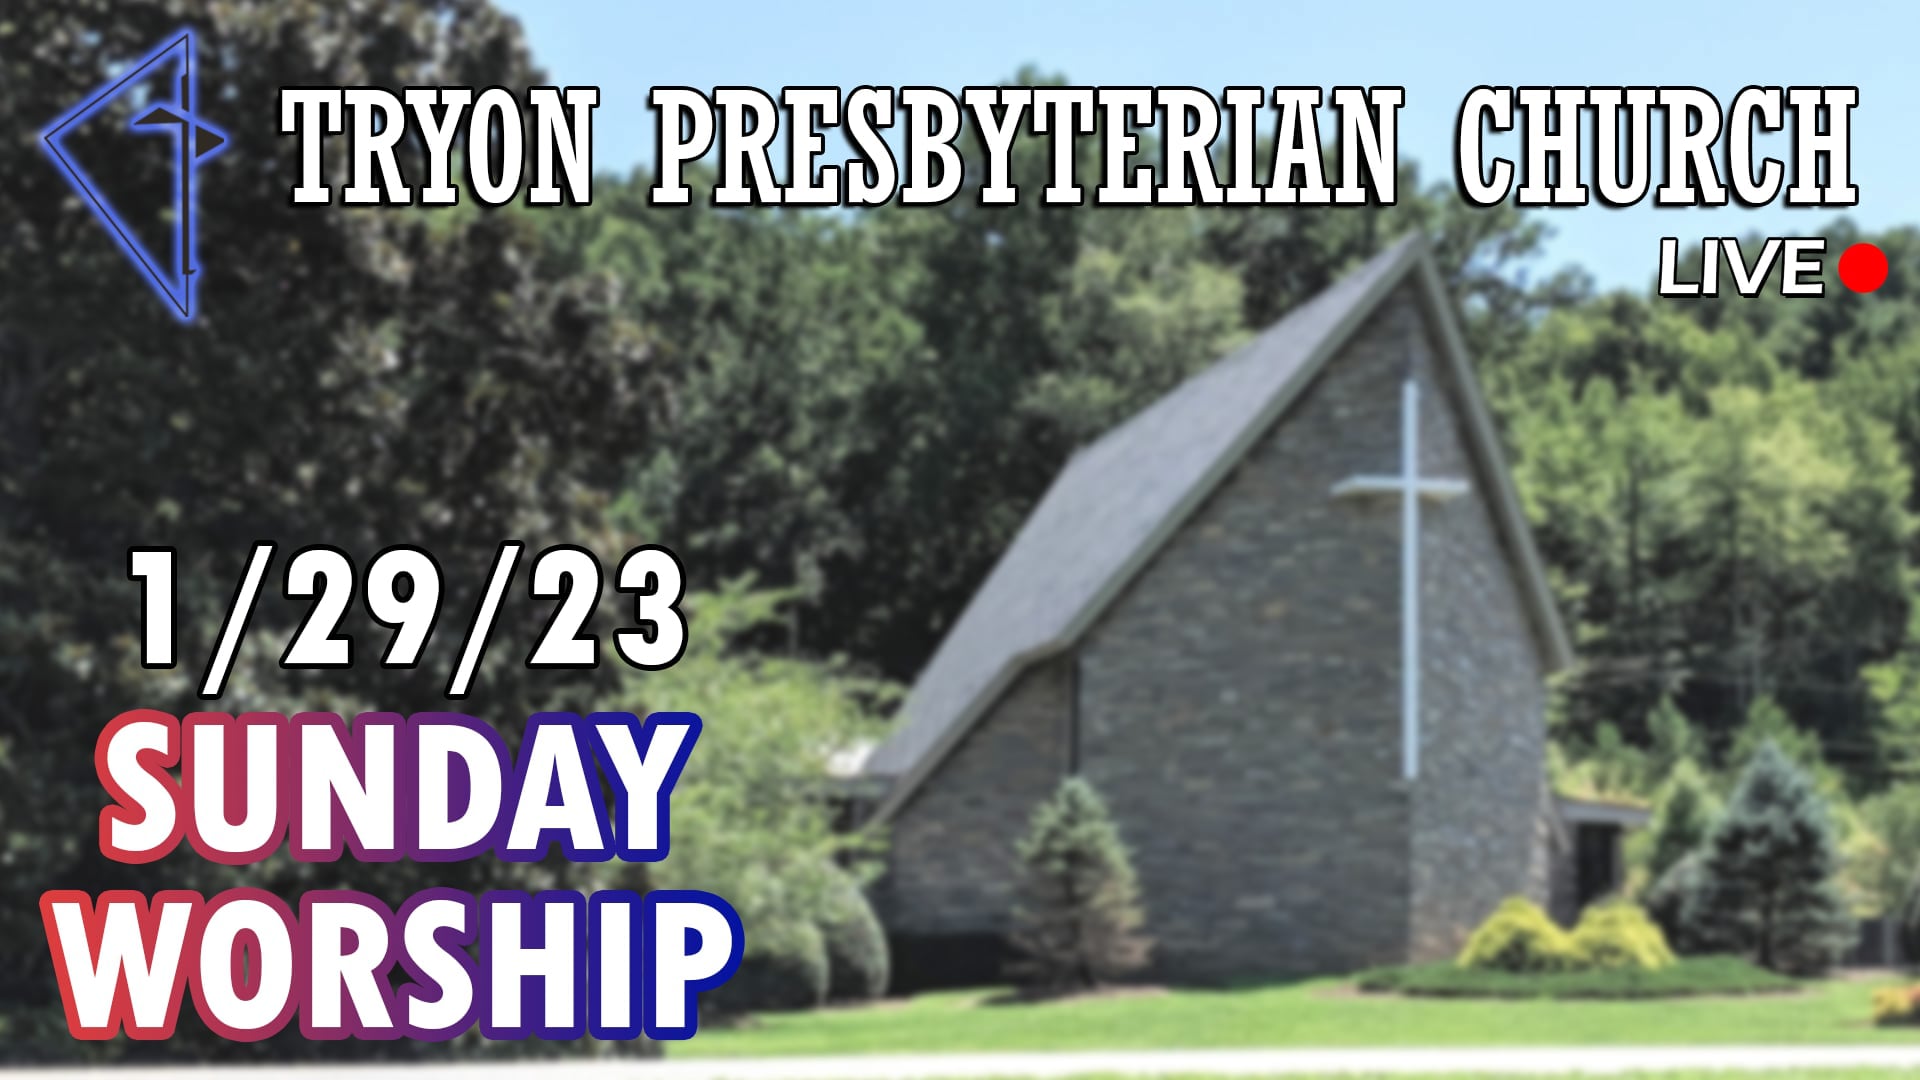 Tryon Presbyterian Church - Sunday Worship 1/29/23